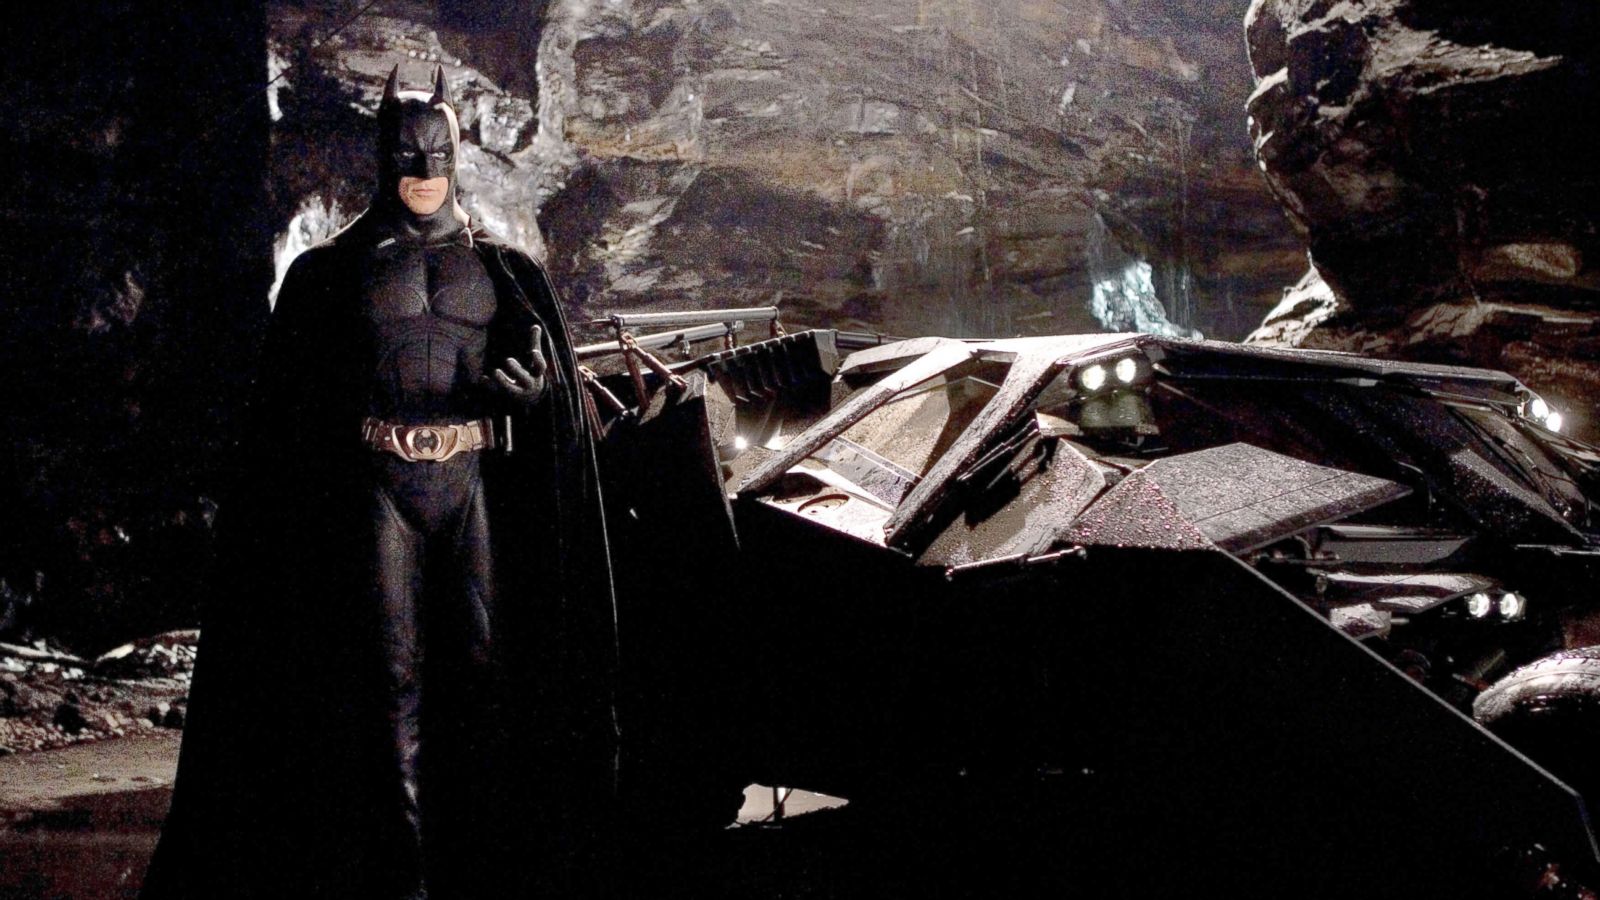 Batman Begins': 5 Ways the Movie Changed Hollywood - ABC News